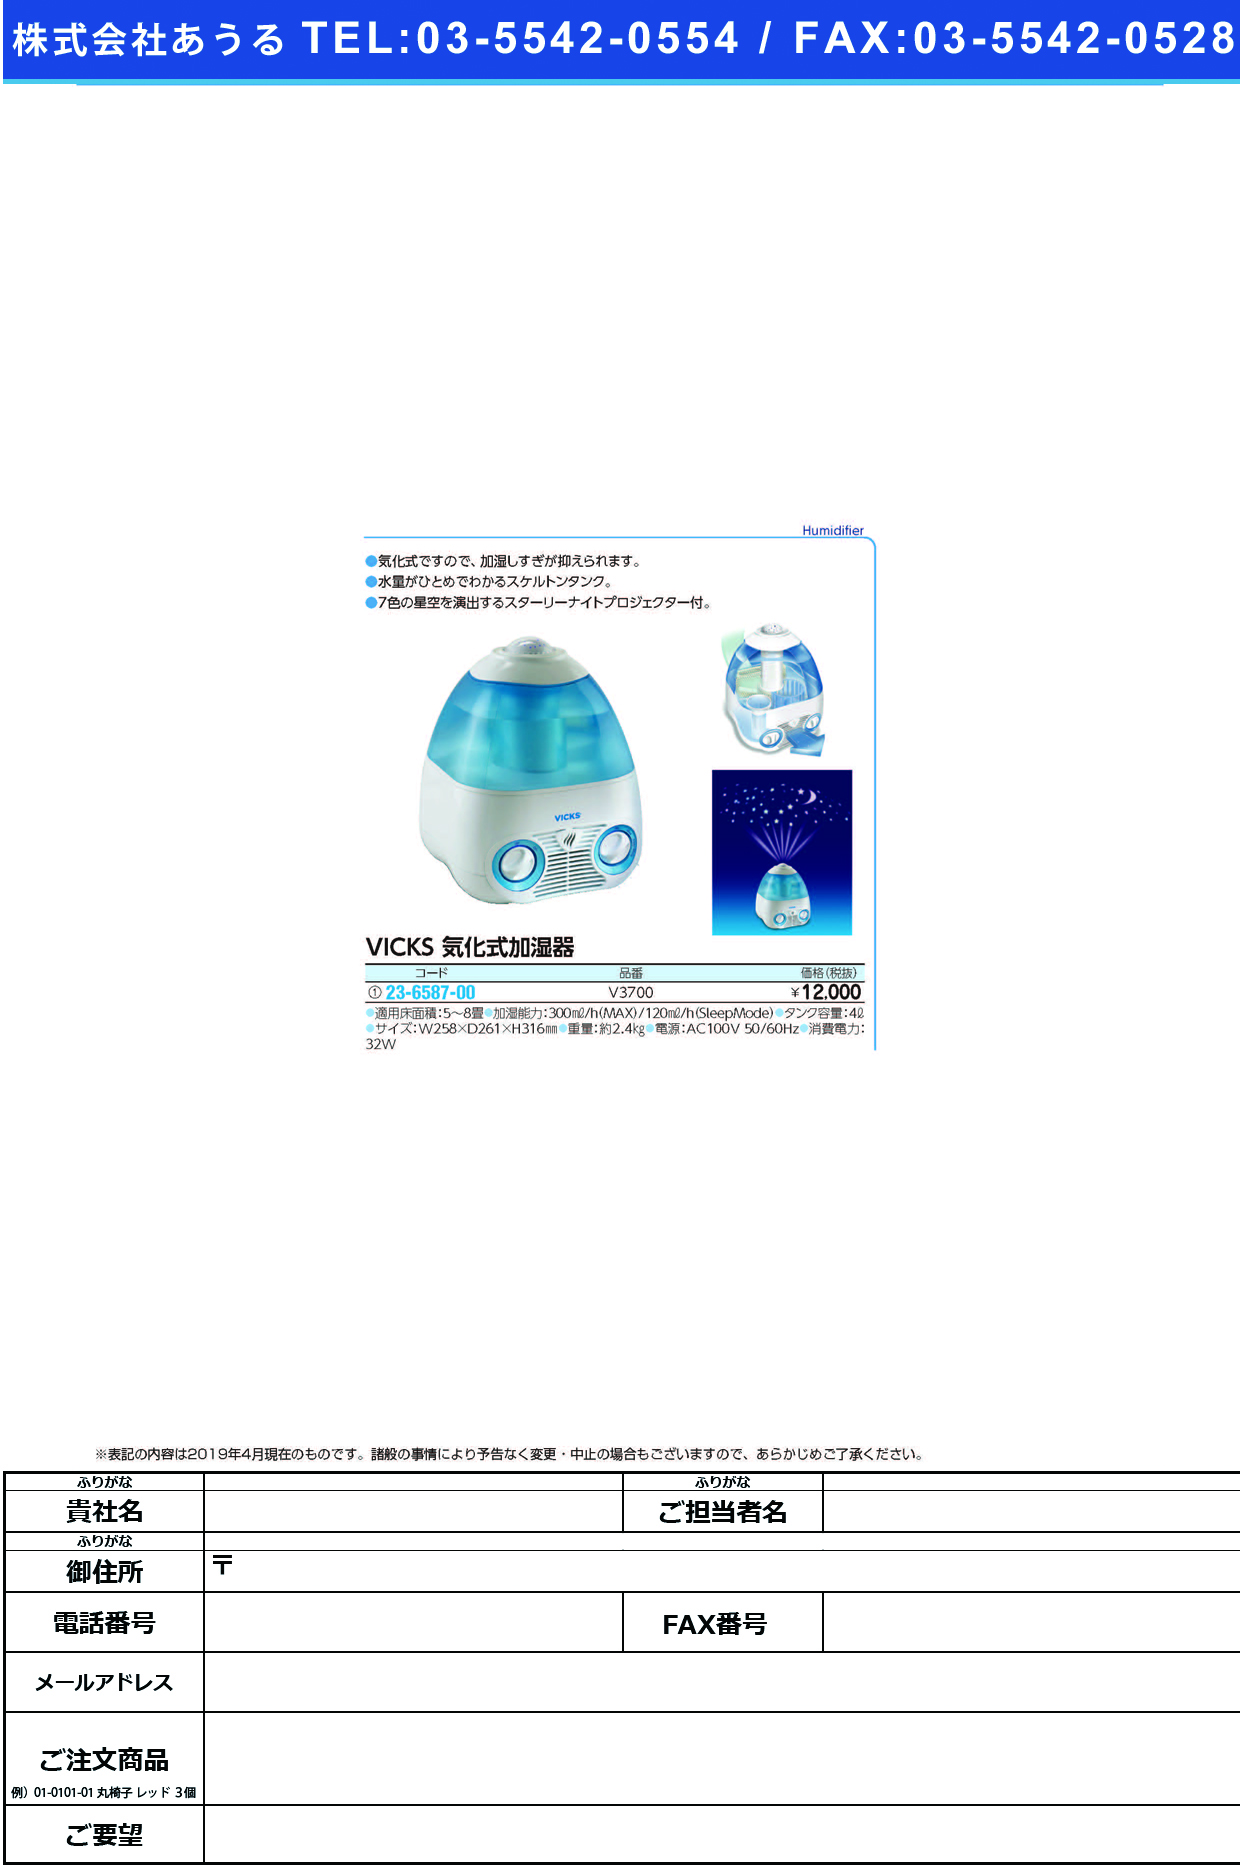 (23-6587-00)ＶＩＣＫＳ気化式加湿器 V3700 VICKSｷｶｼｷｶｼﾂｷ【1台単位】【2019年カタログ商品】